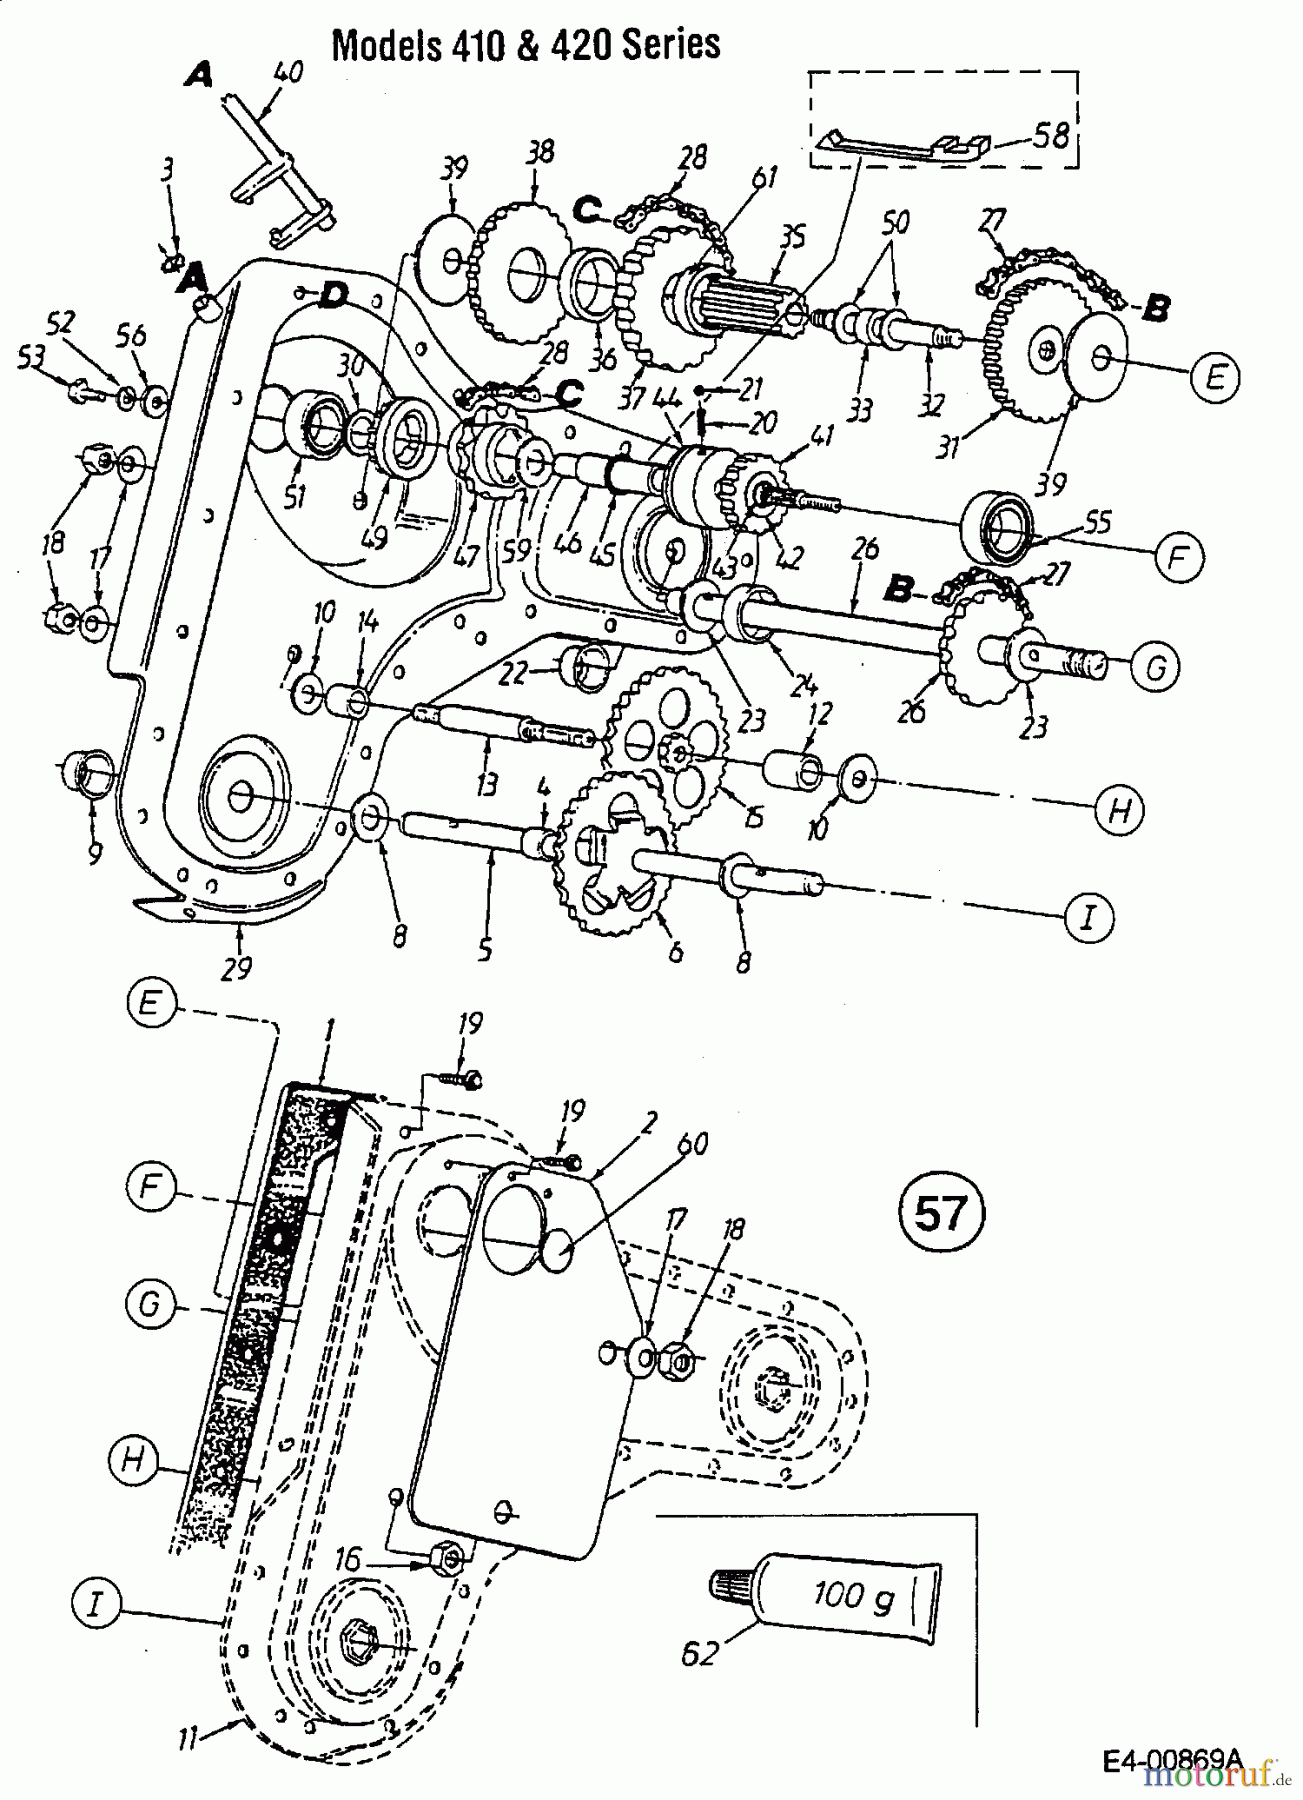  White Motorhacken RB 530 21A-410-679  (2001) Getriebe